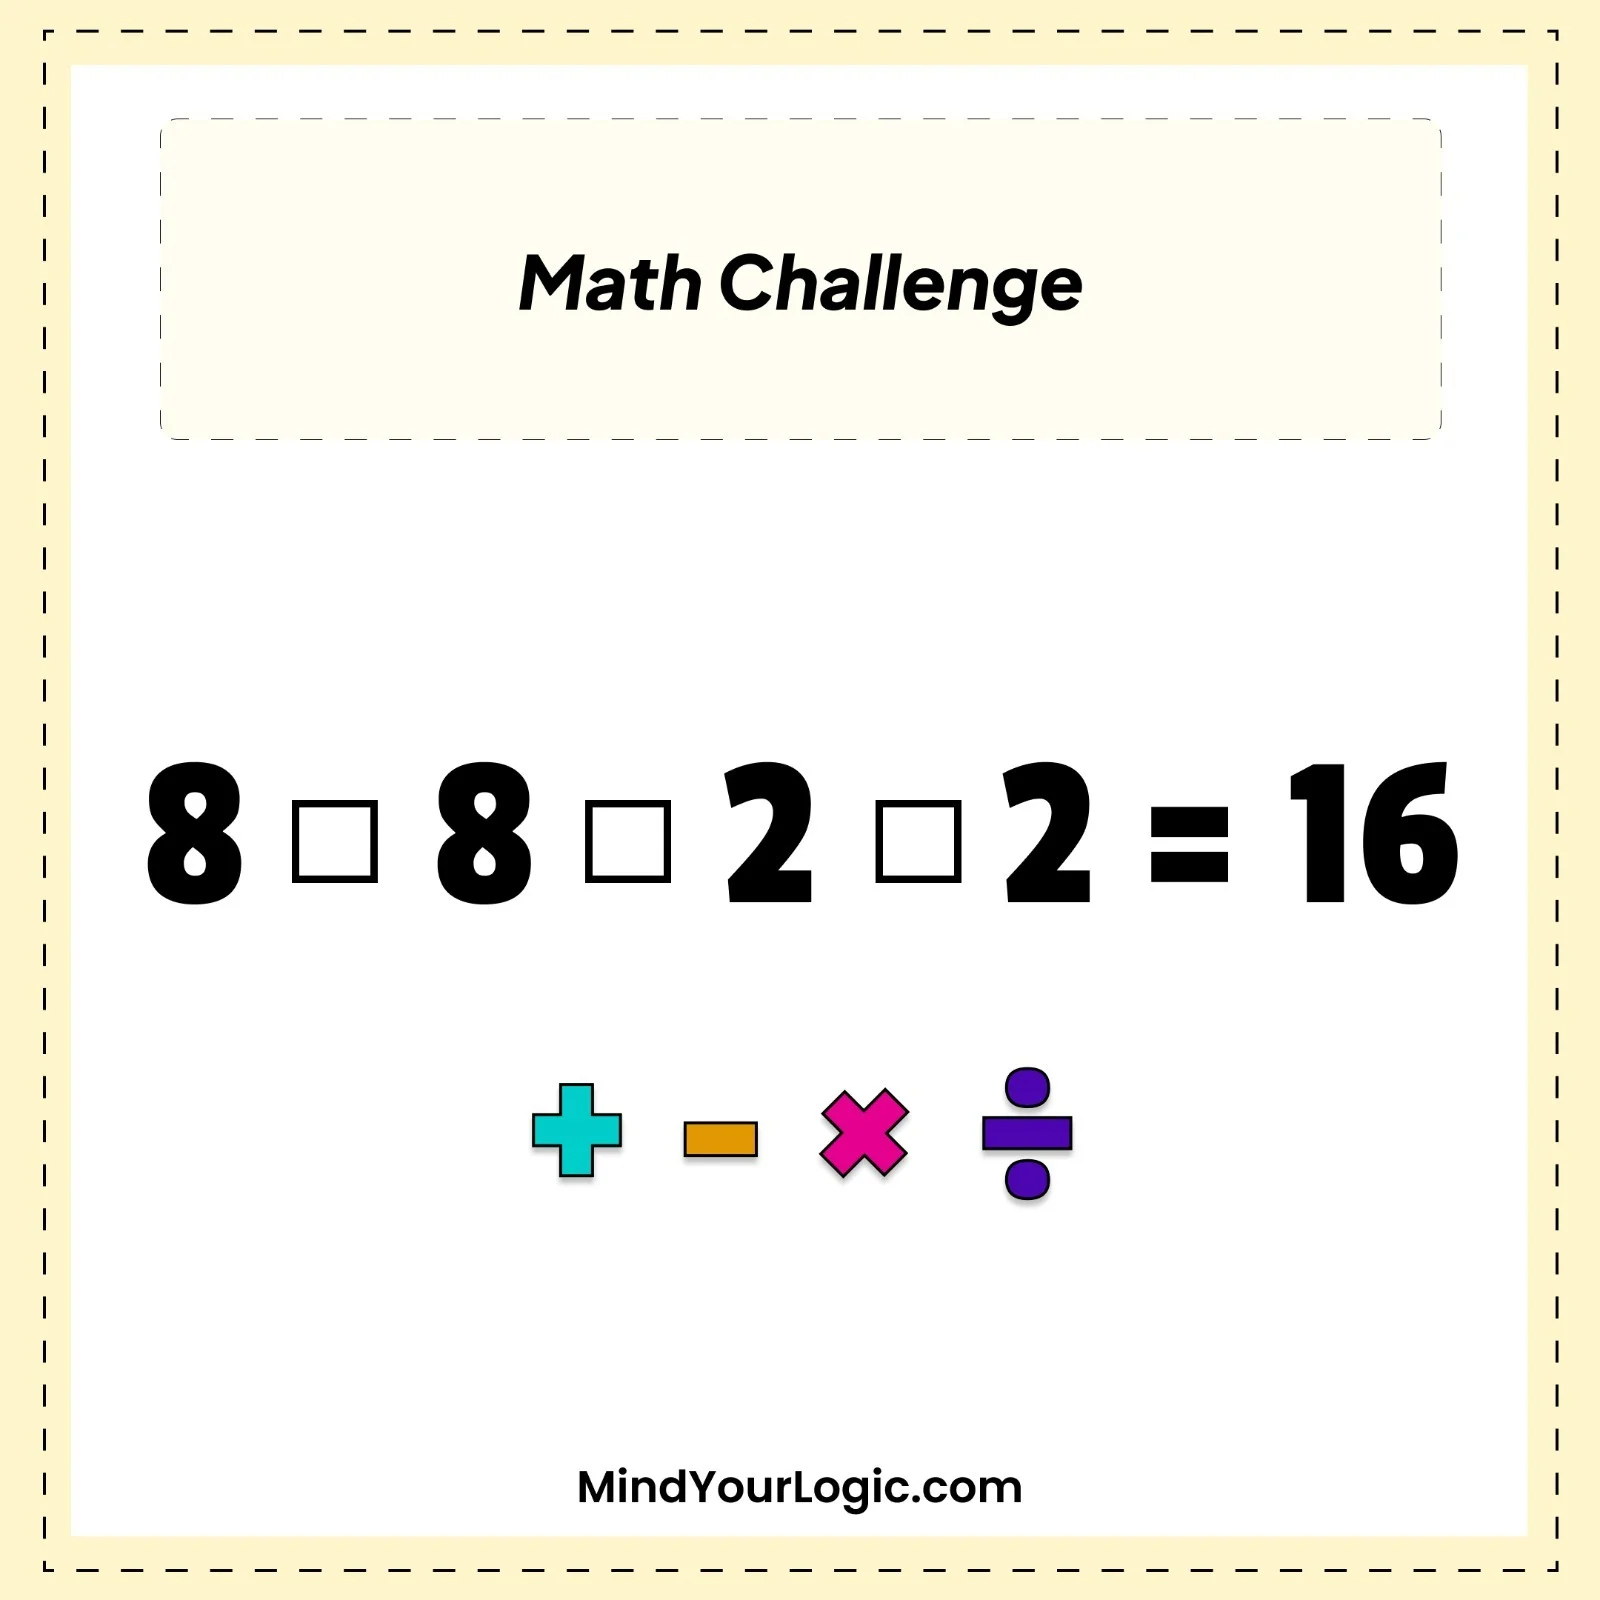 math-challenge-make-equation-correct-using-three-symbols